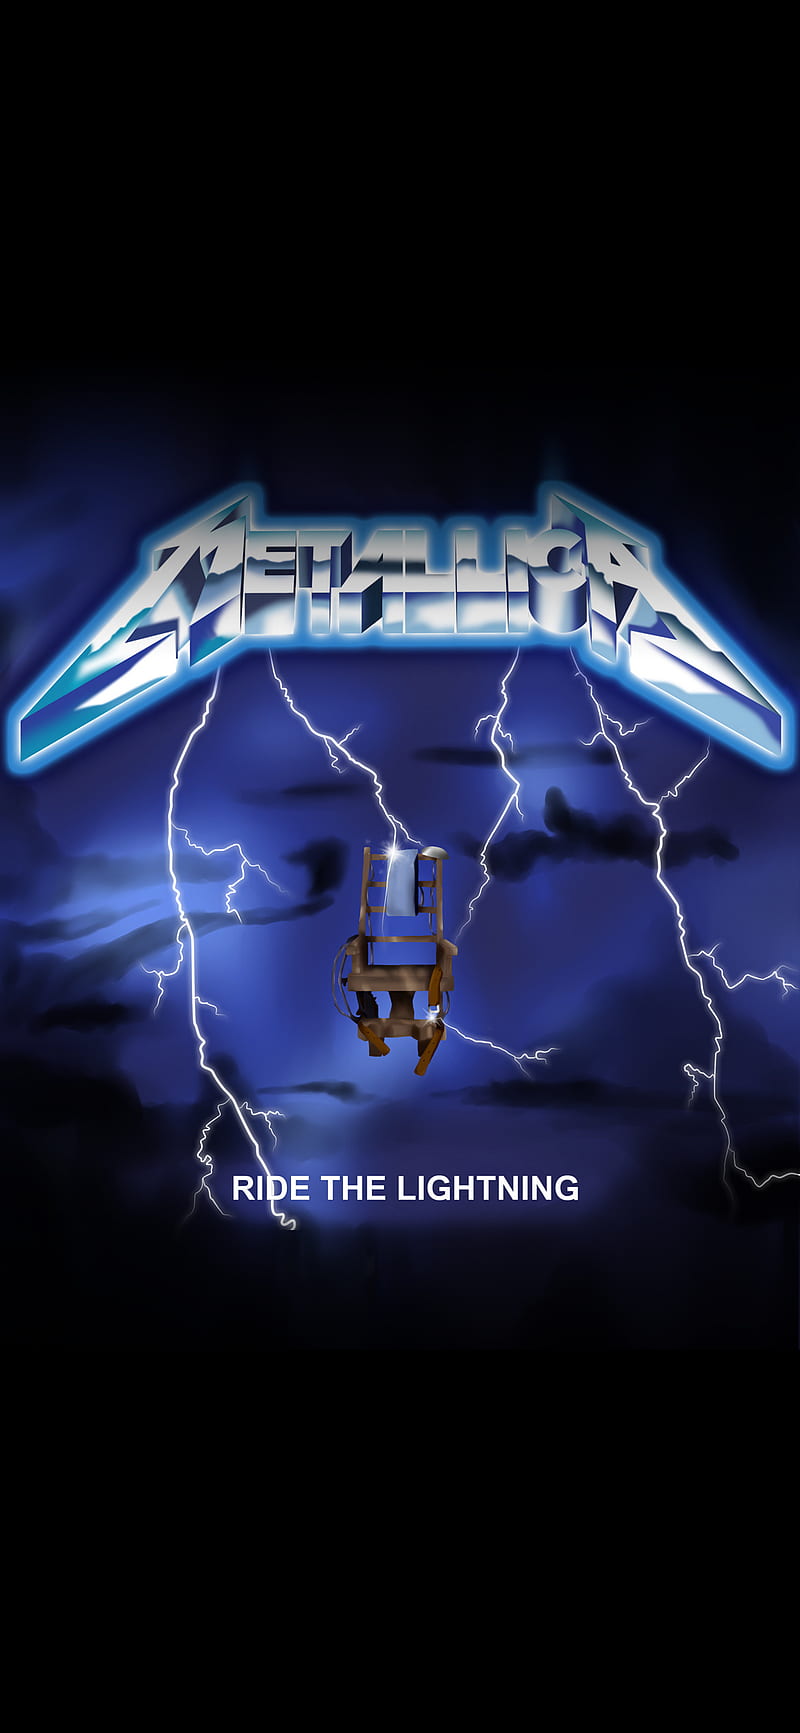 metallica ride the lightning wallpaper iphone